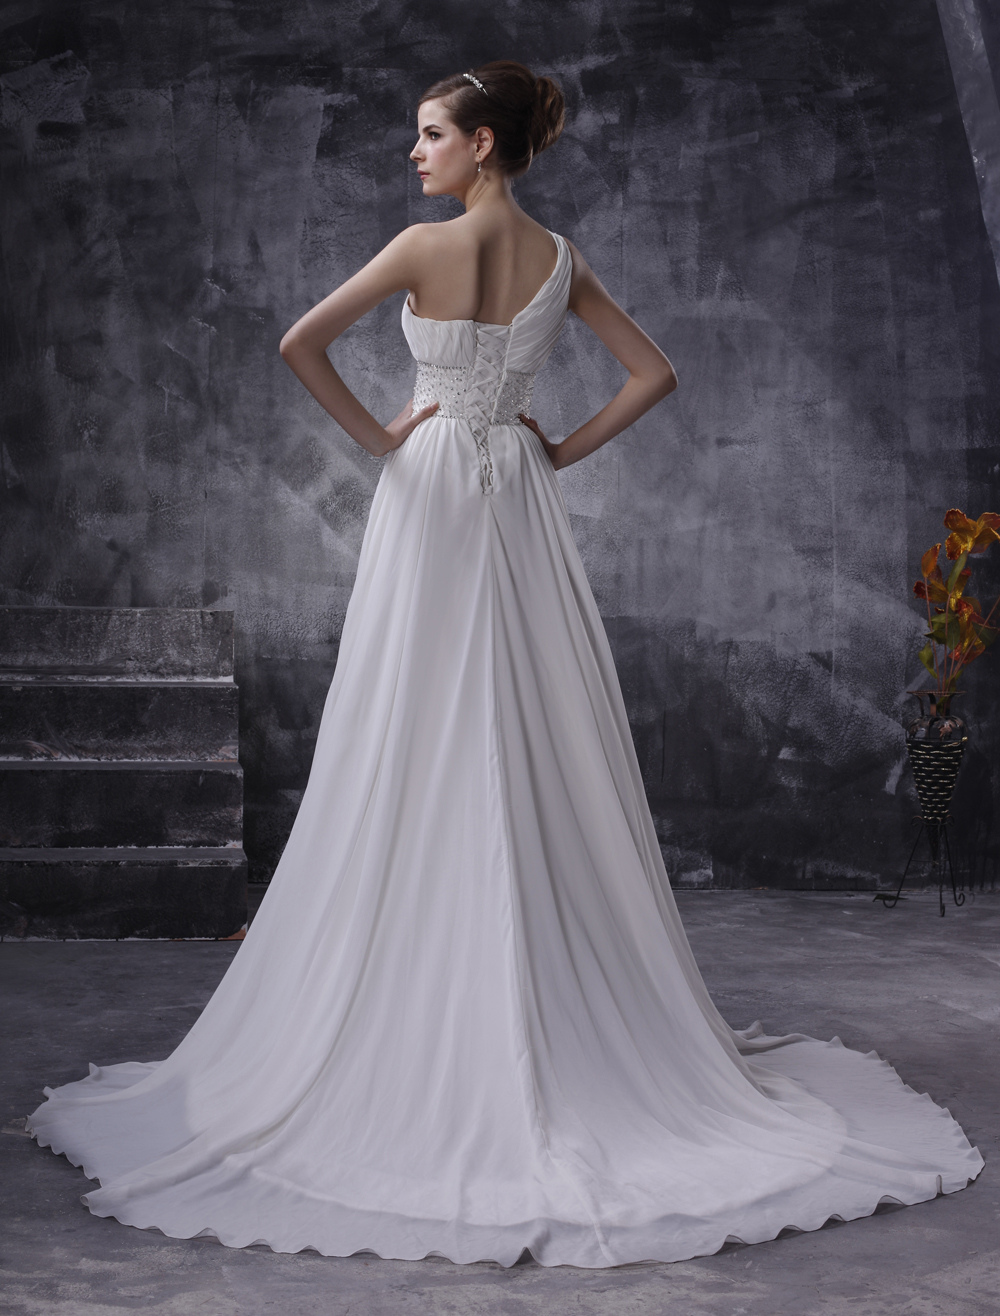 Fabulous White Chiffon One Shoulder Sweep Wedding Dress - Milanoo.com